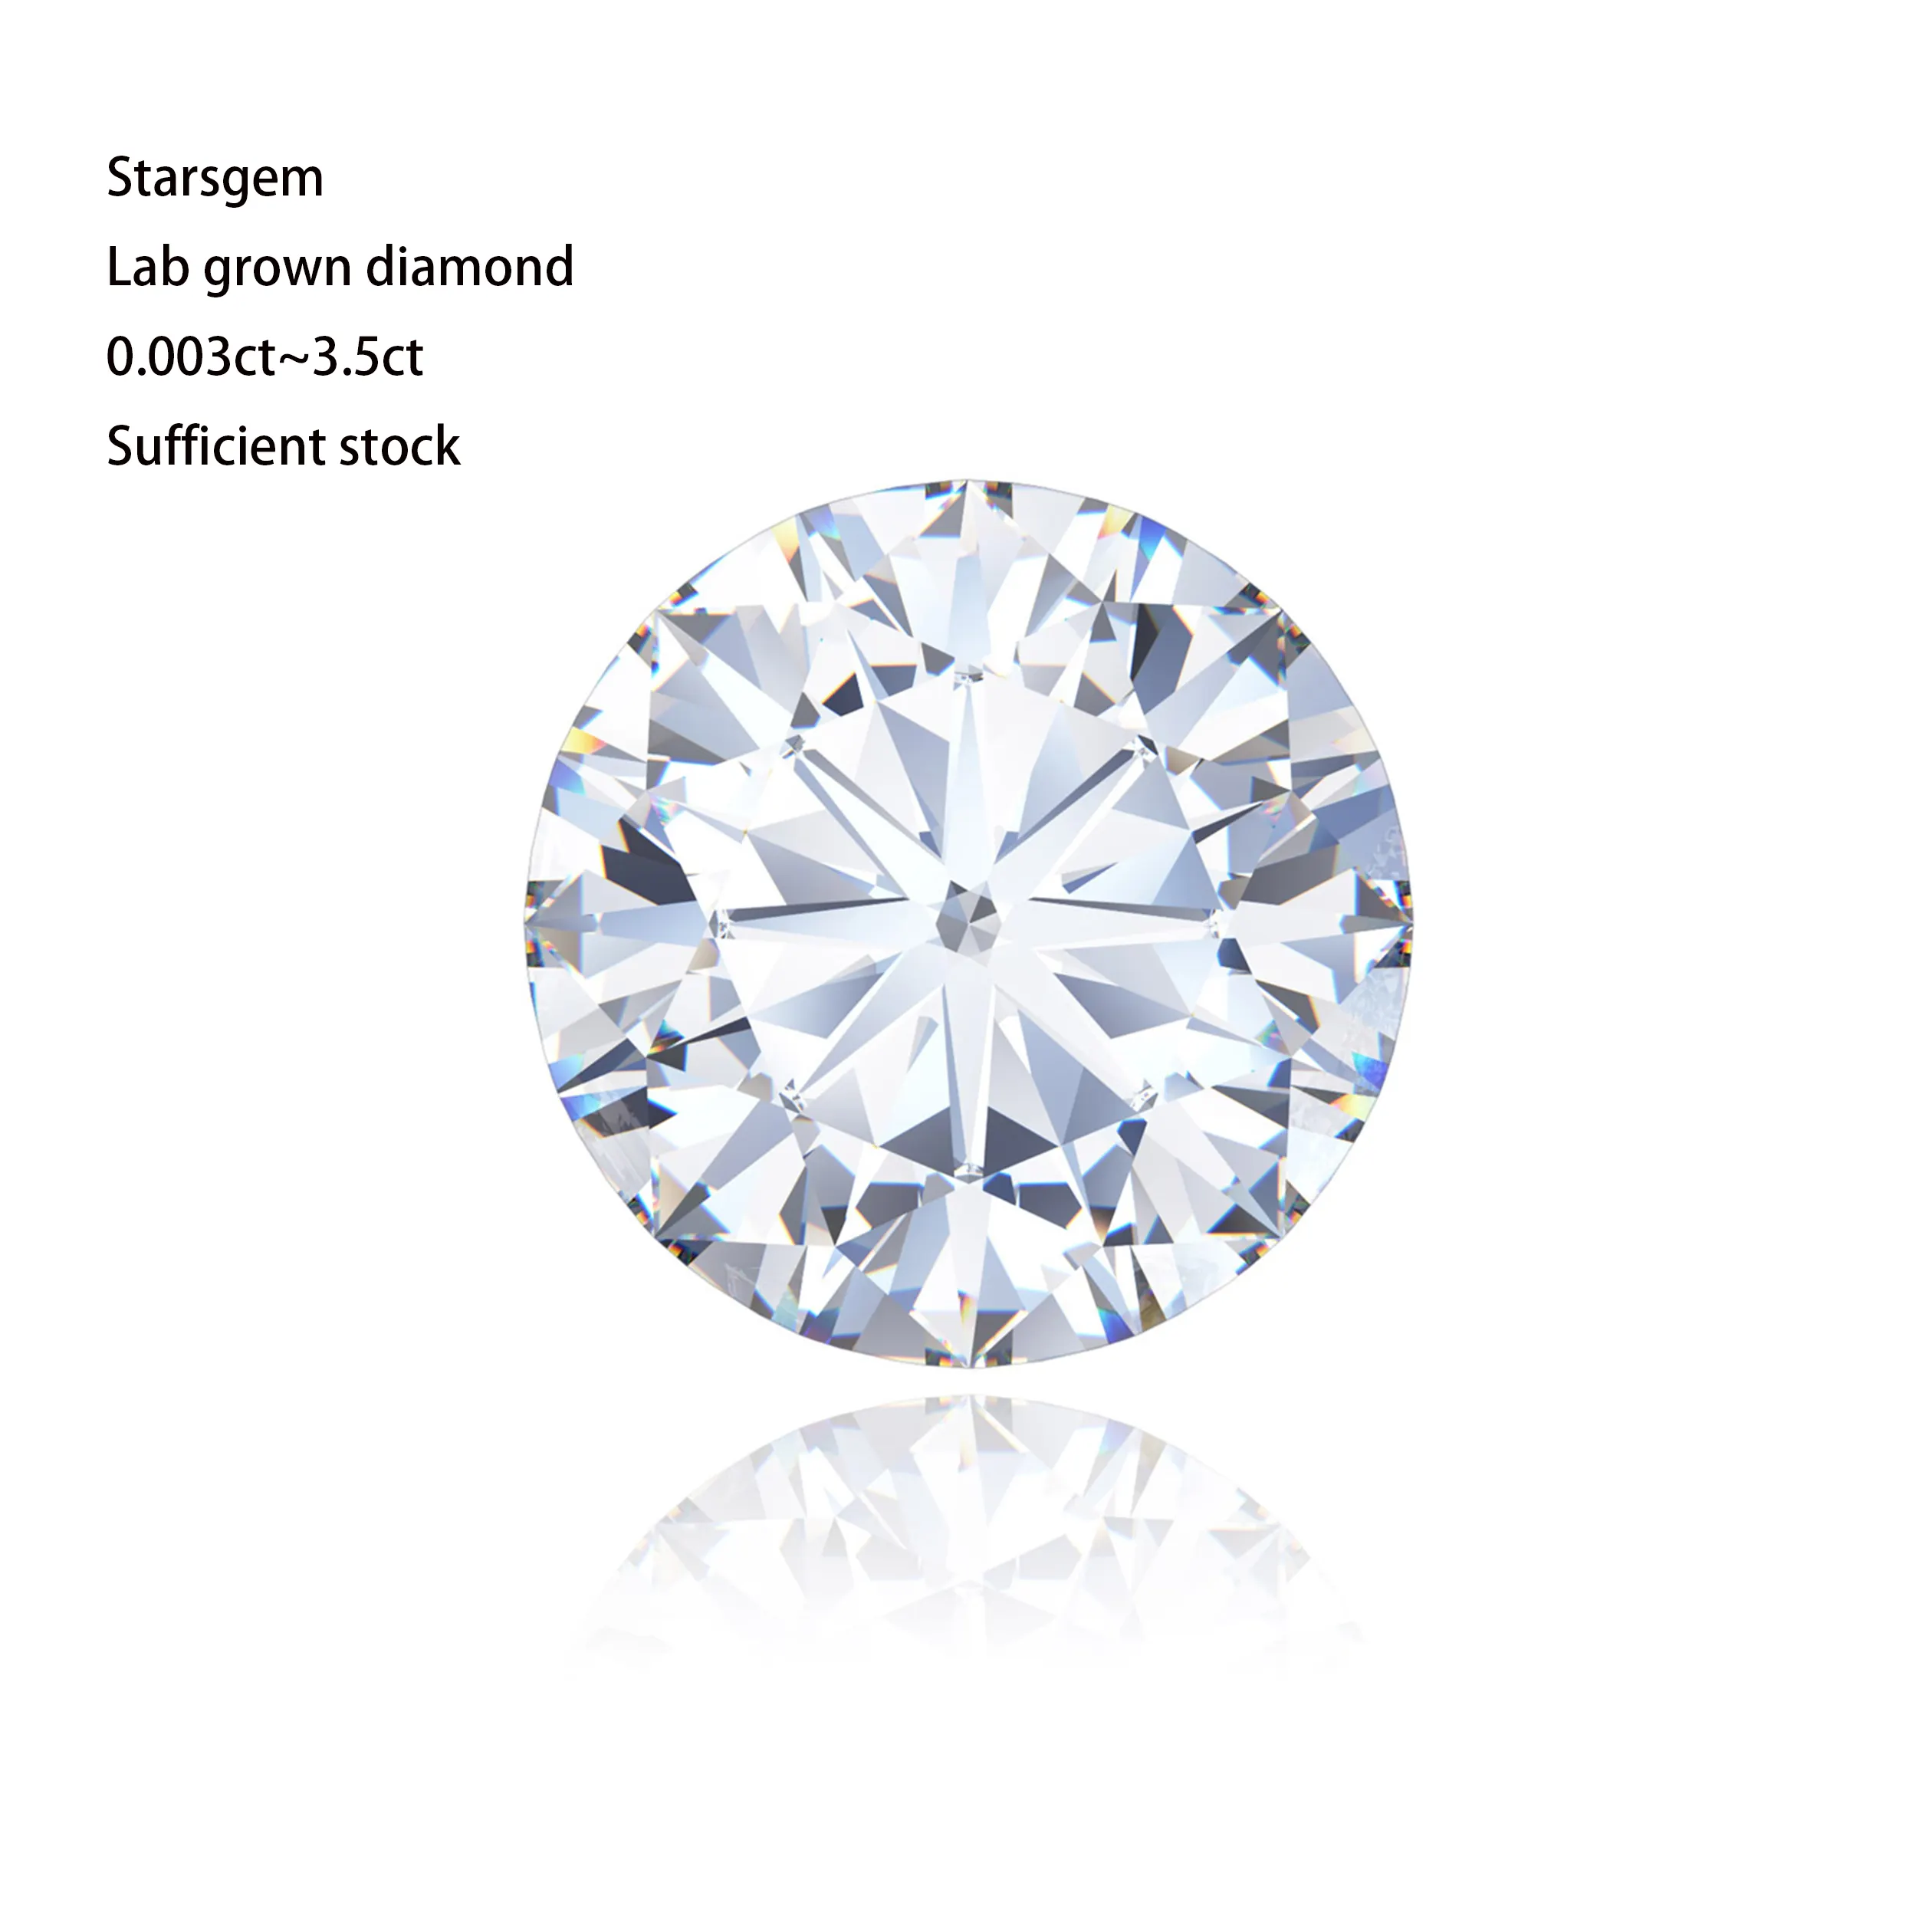 Starsgem 실험실 다이아몬드 도매 라운드 브릴리언트 컷 실험실 느슨한 다이아몬드 6mm 돌 사용 결혼 반지 실험실 성장 다이아몬드